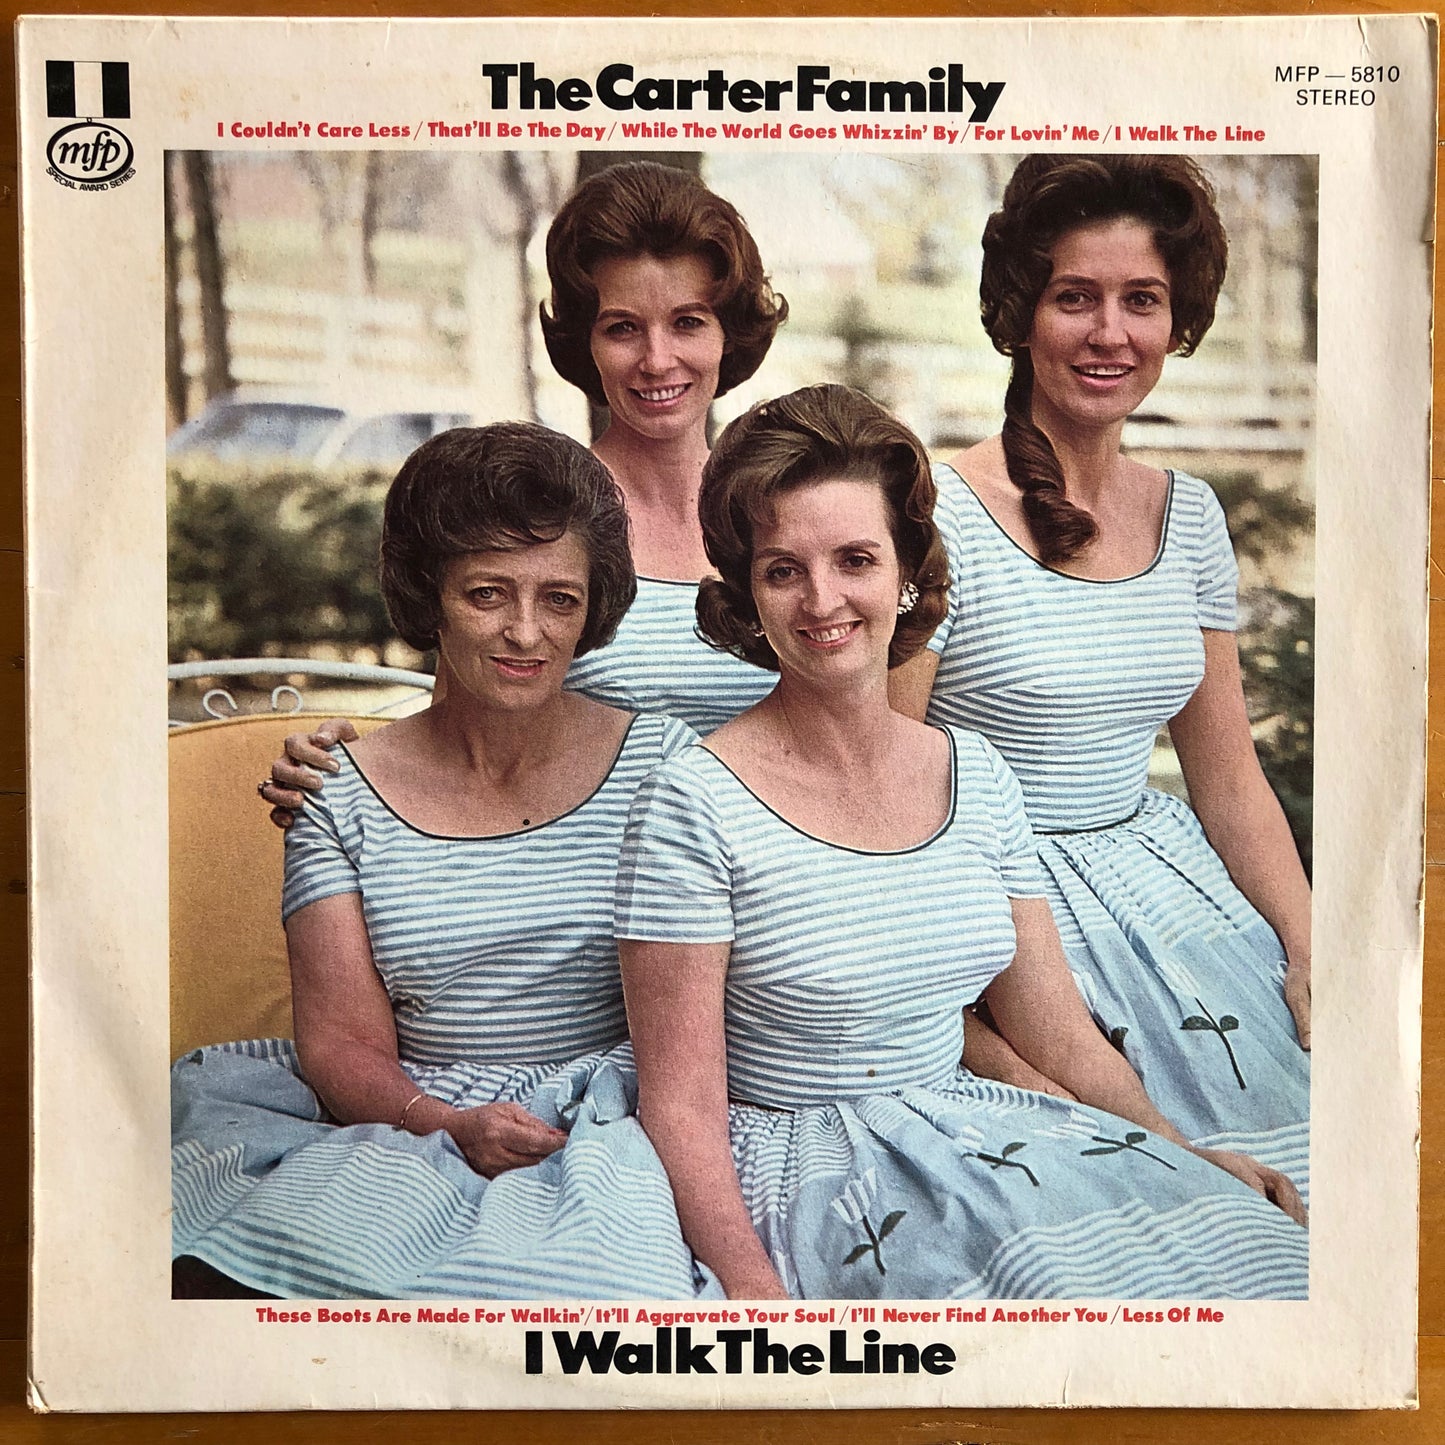 The Carter Family - I Walk The Line